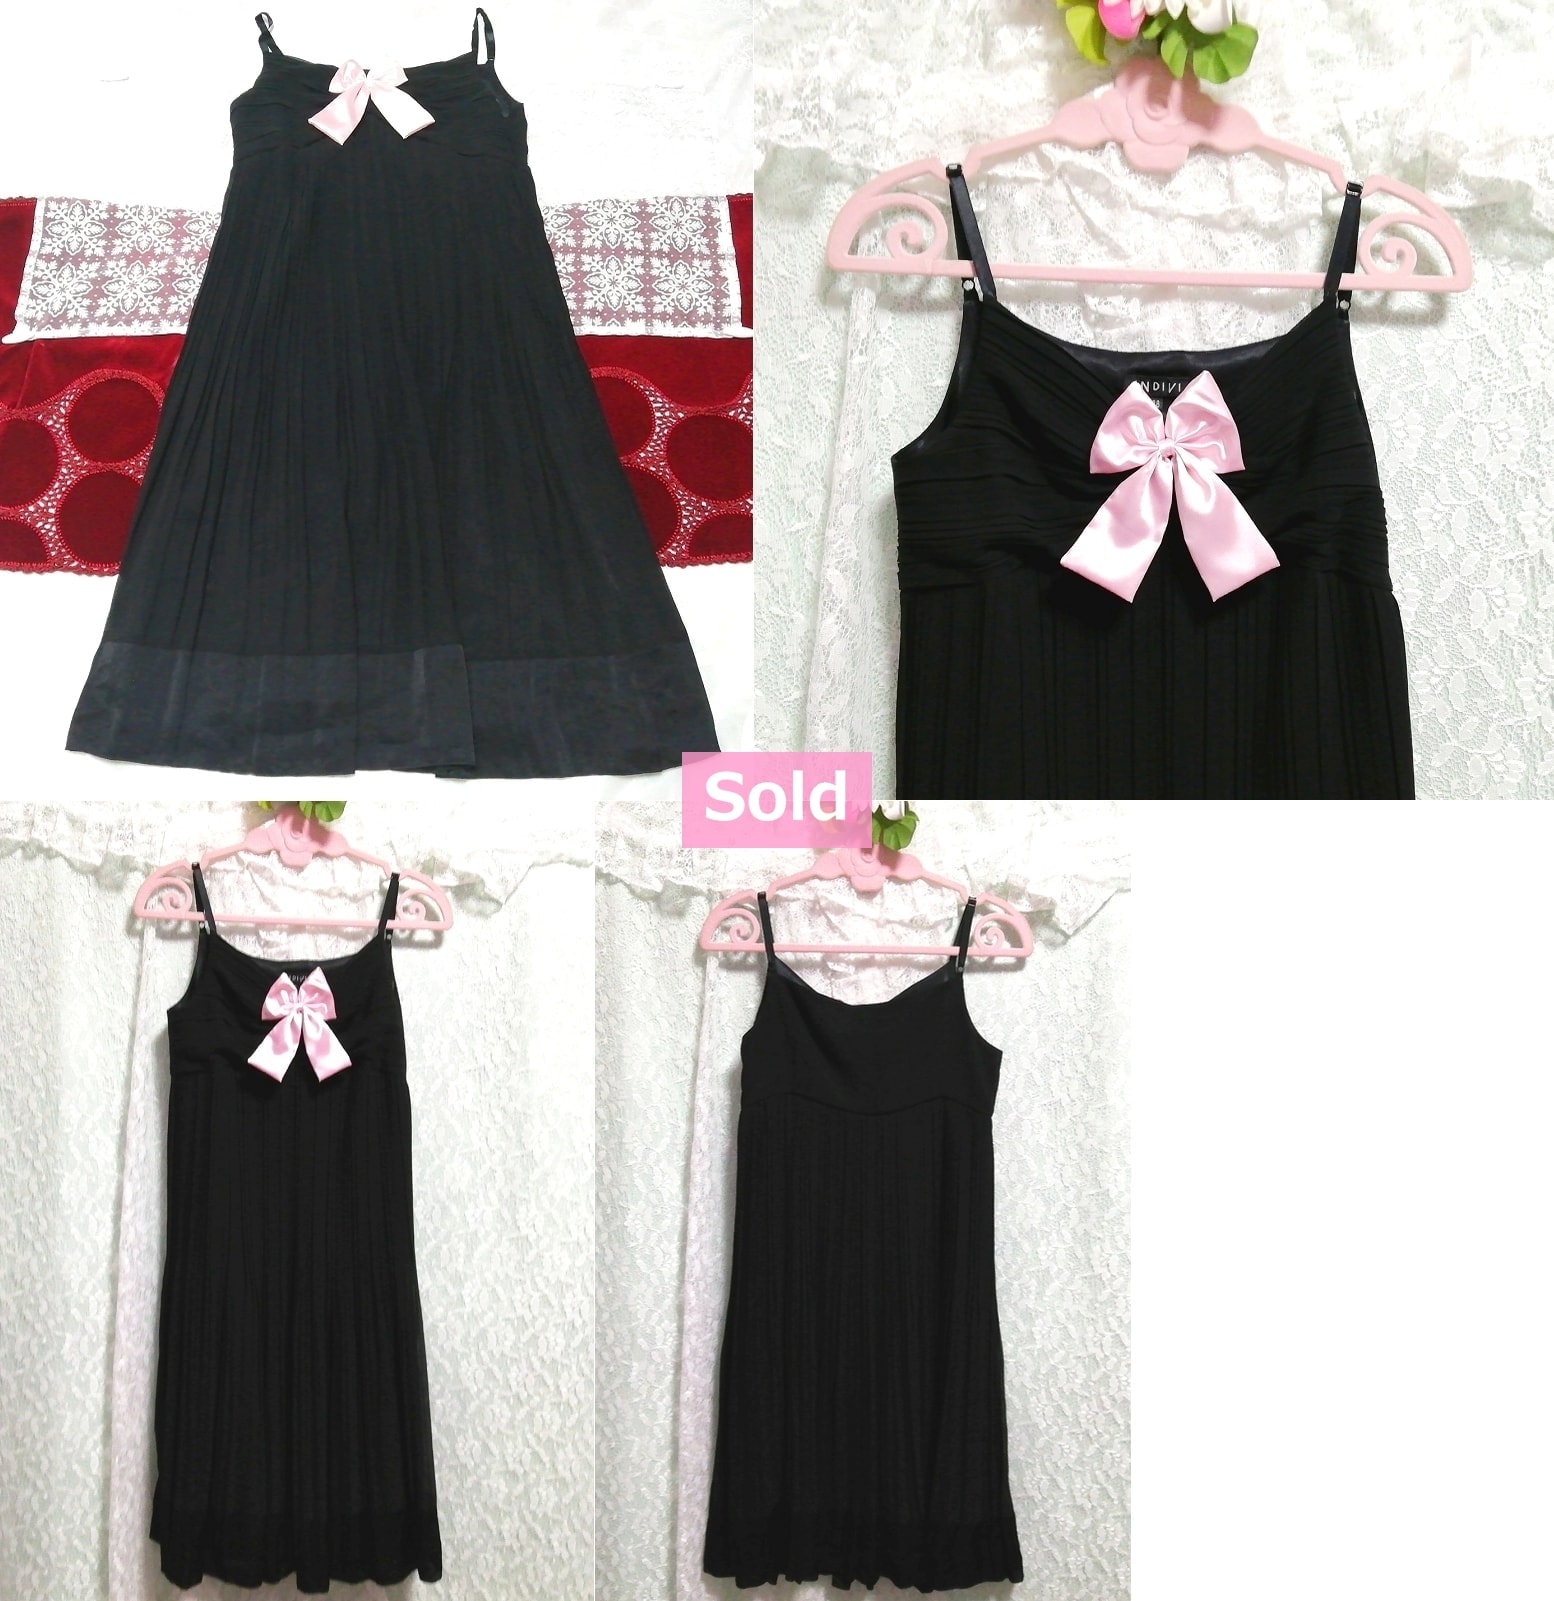 Black pleated chiffon camisole negligee nightgown dress, fashion, ladies' fashion, camisole